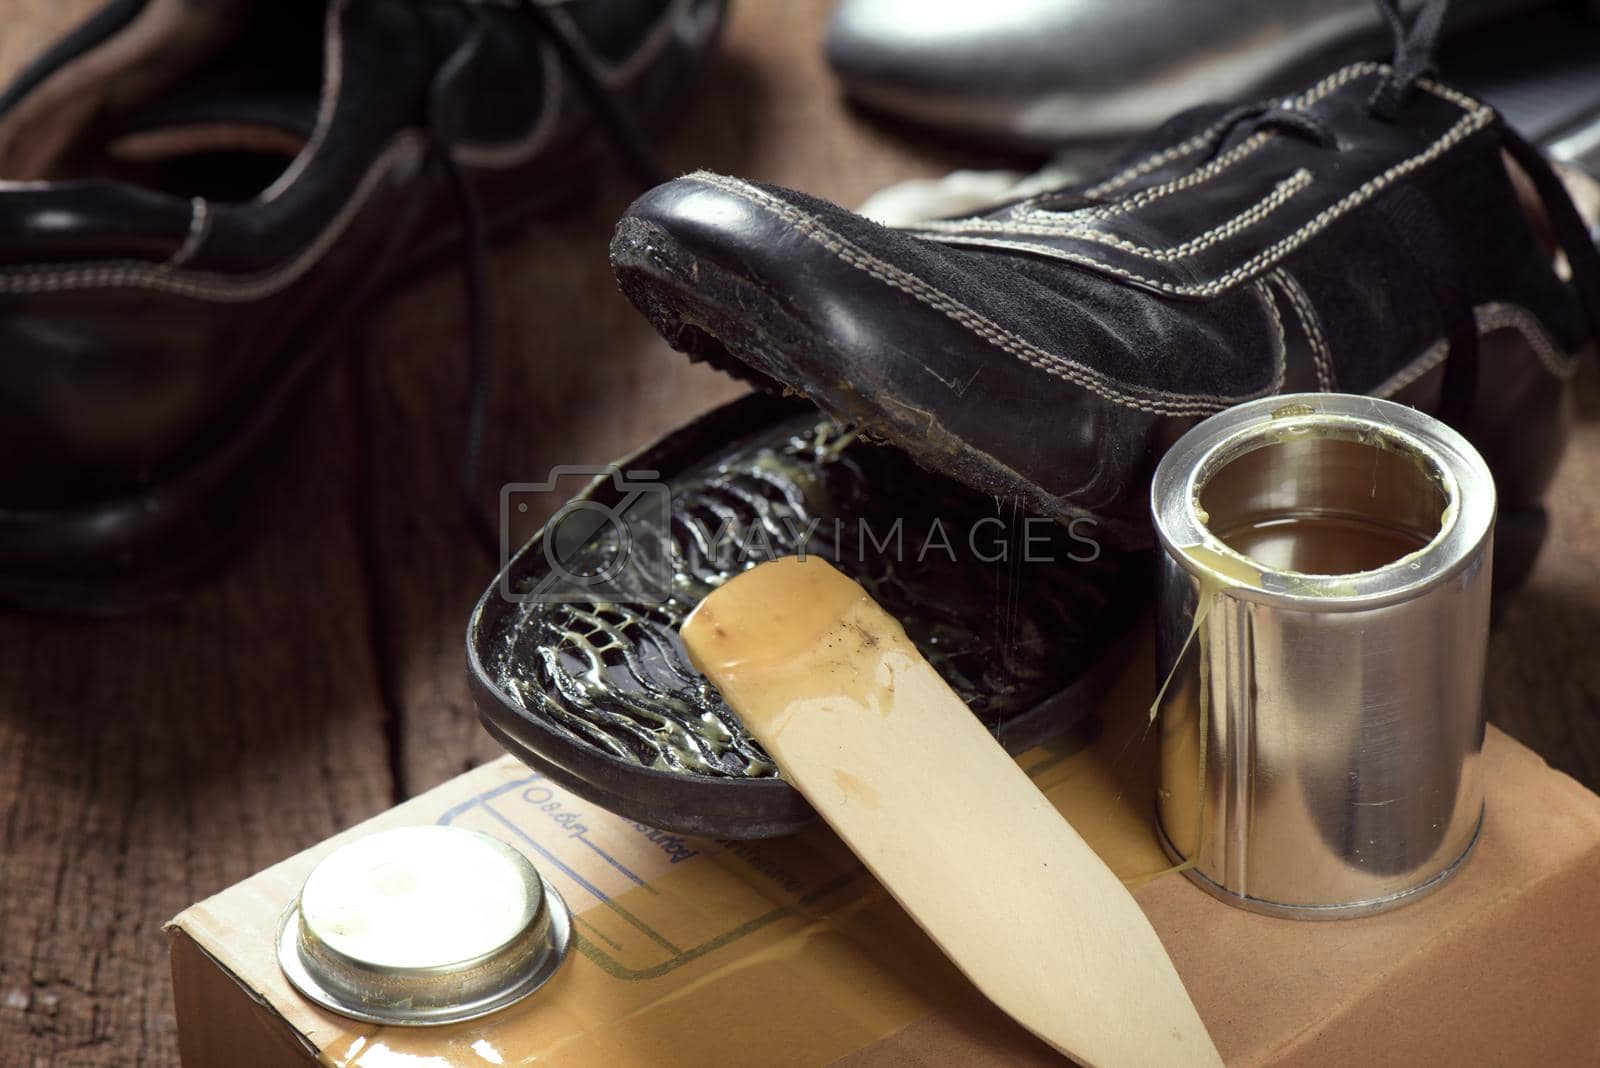 Royalty free image of shoe repair by norgal